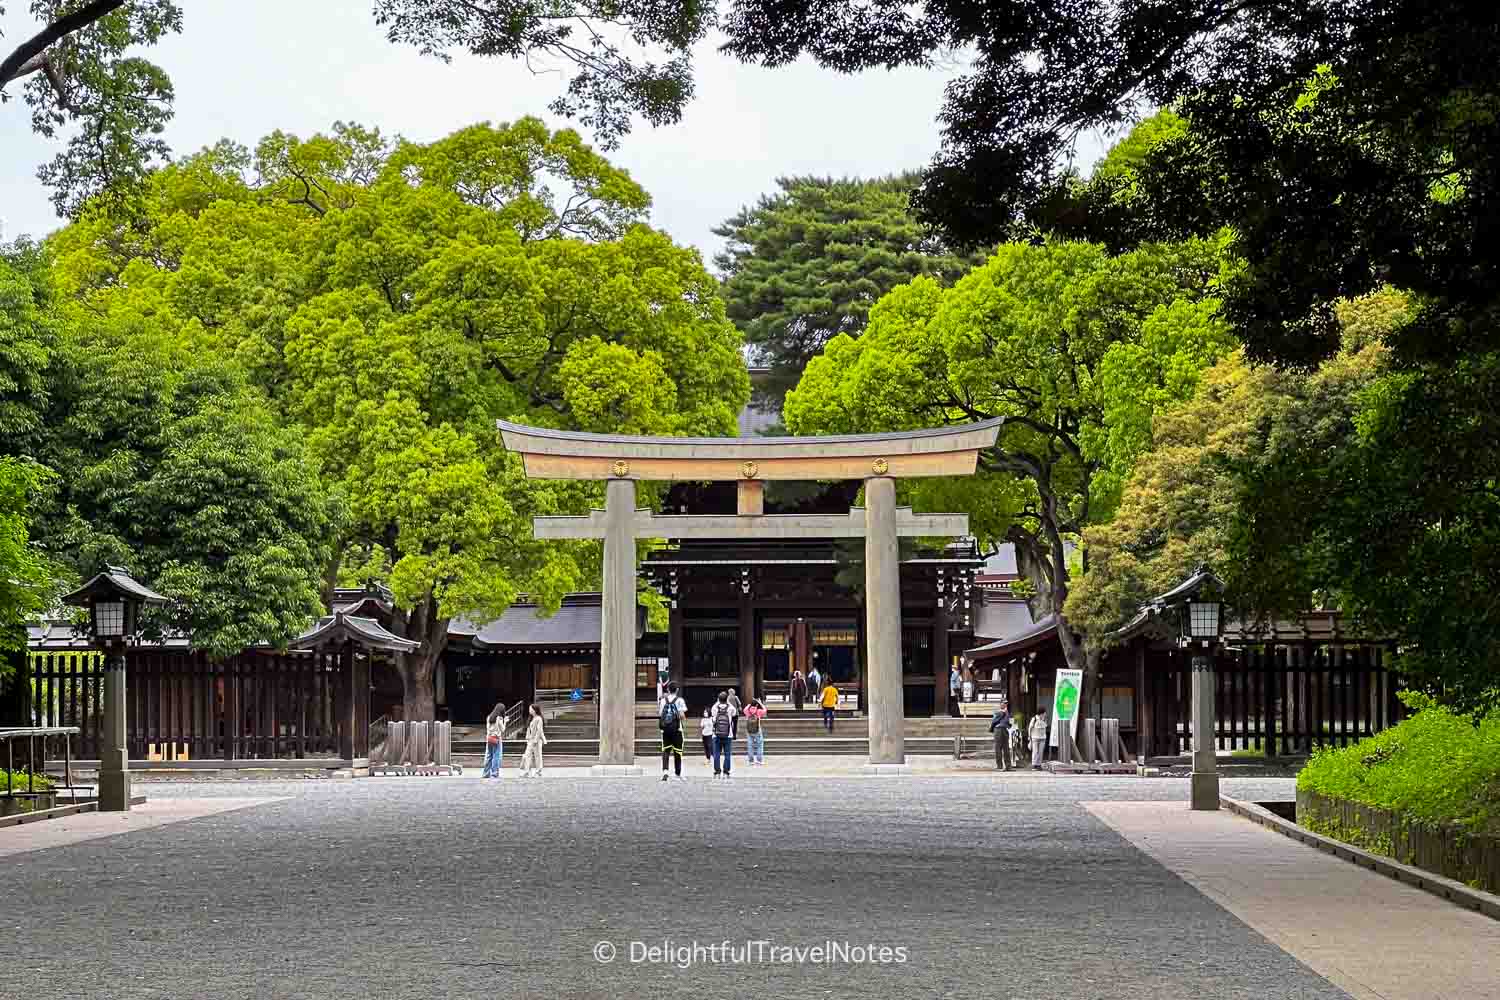 Third torii before the main gate of Meiji Jingu.